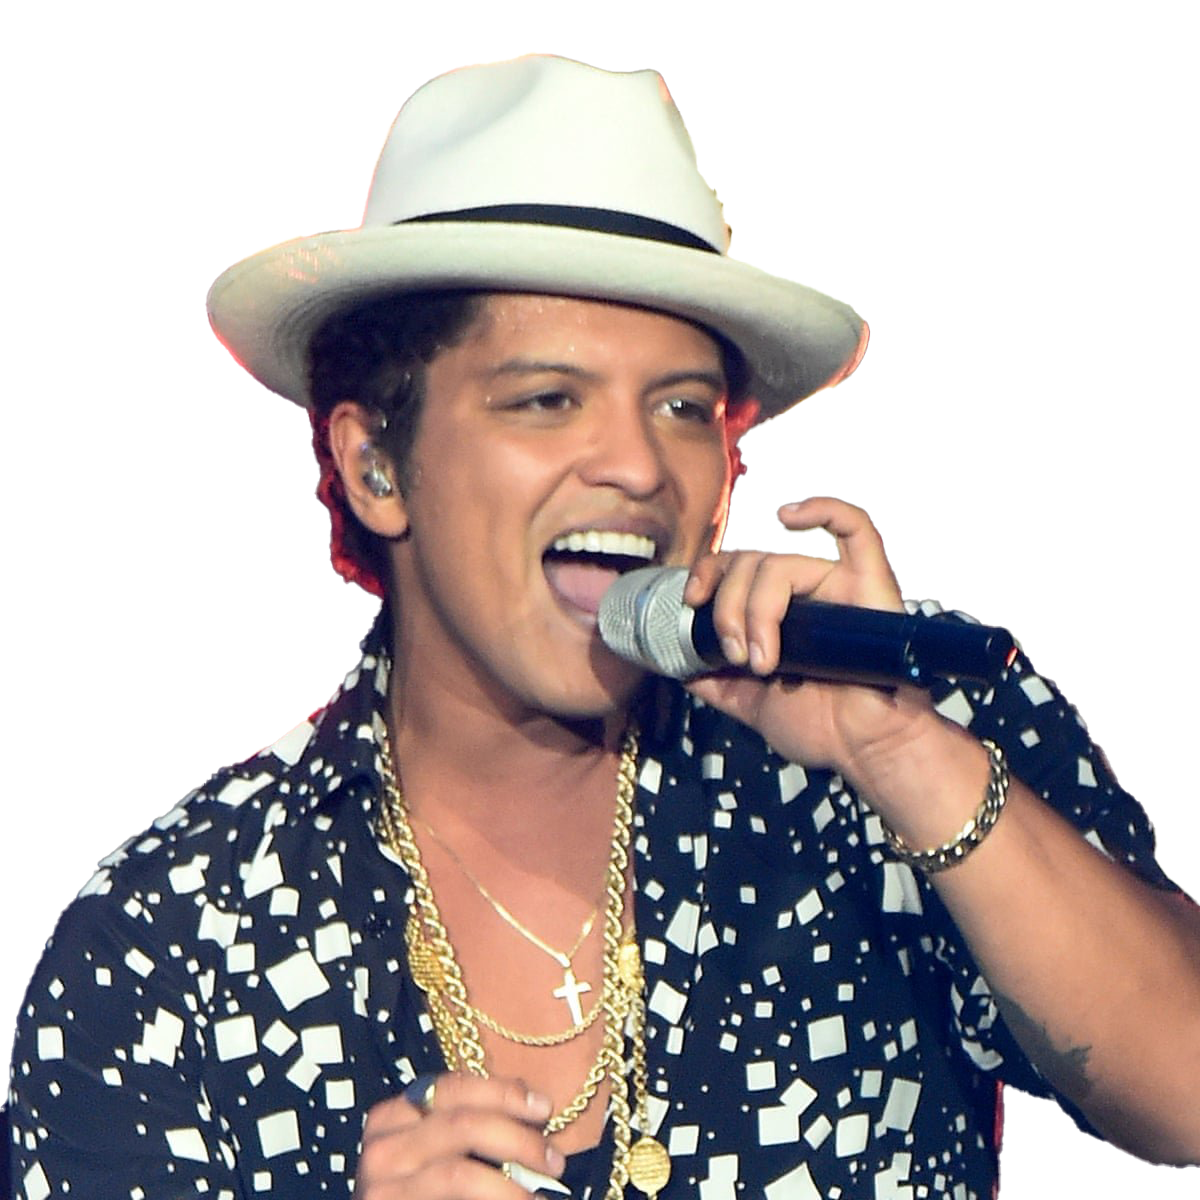 Chanteur Bruno Mars